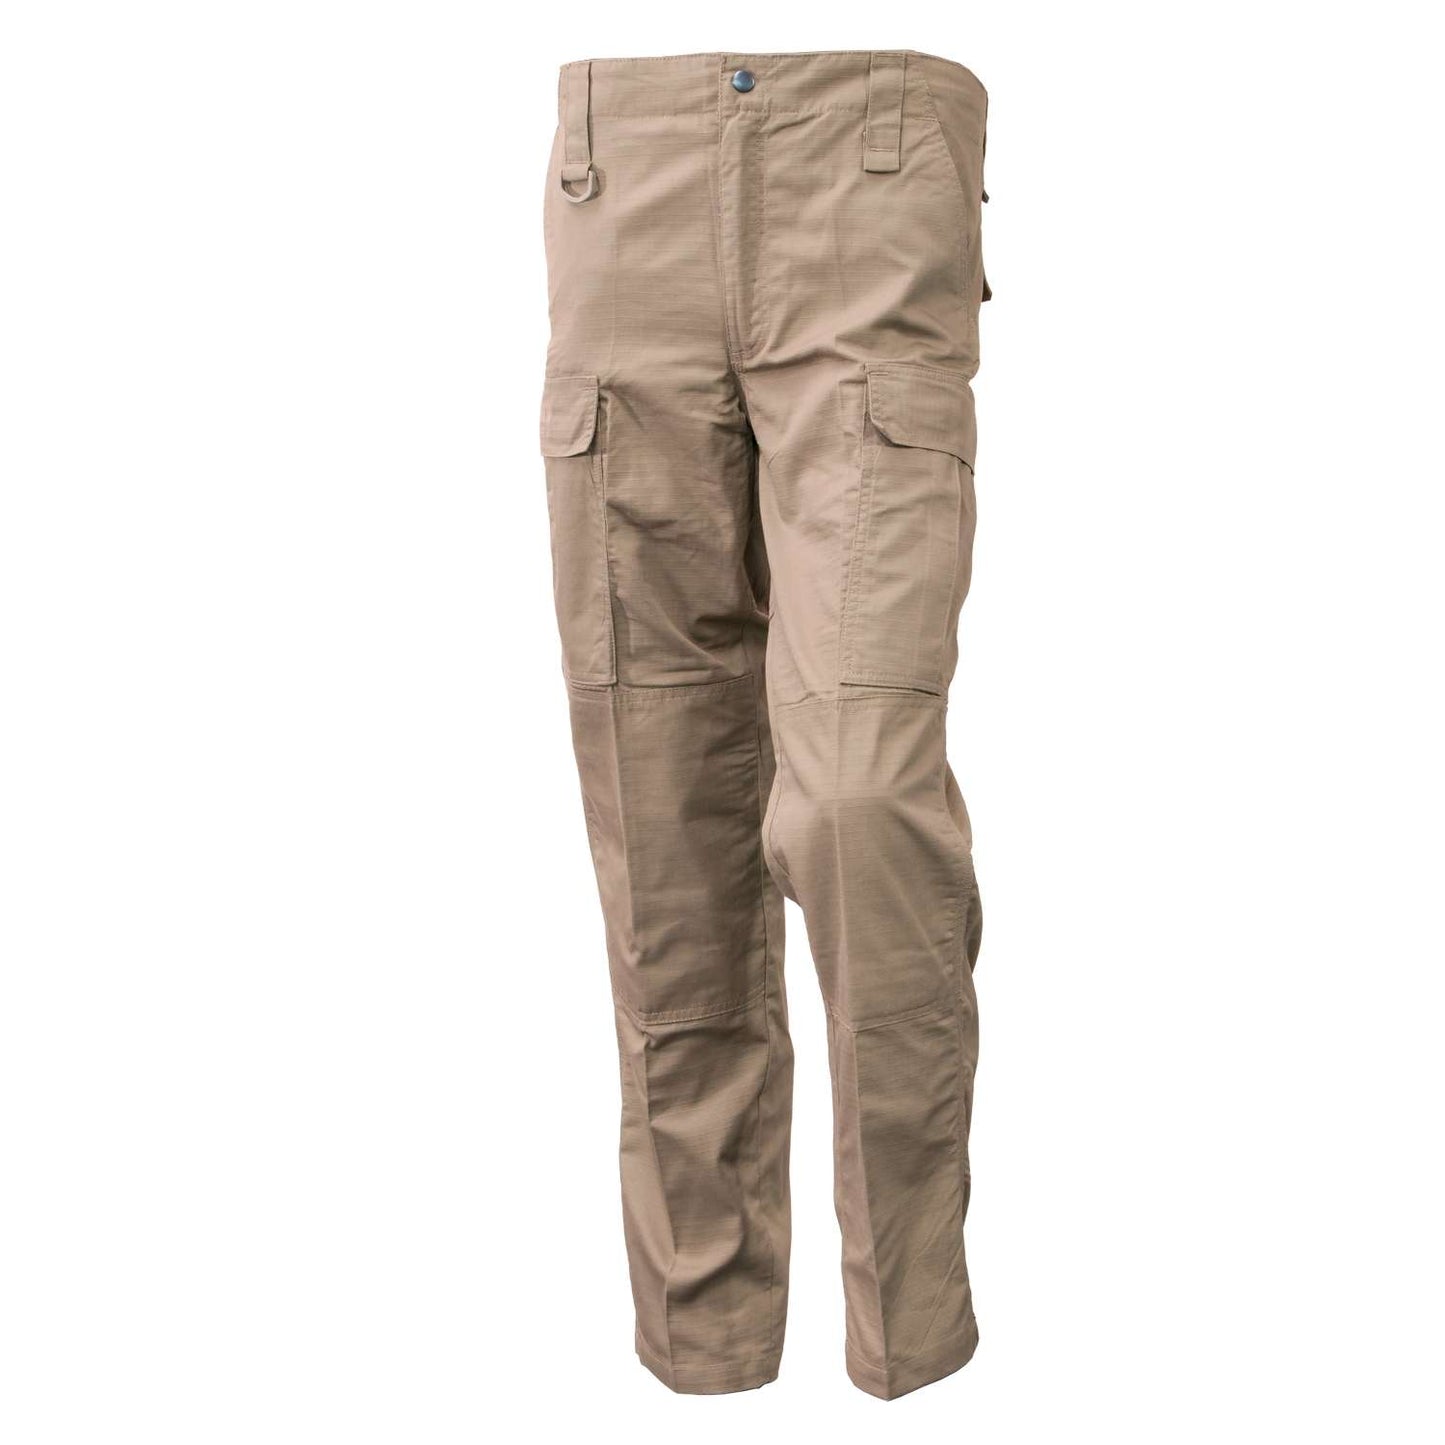 Tippmann Tactical TDU Pants - Tan